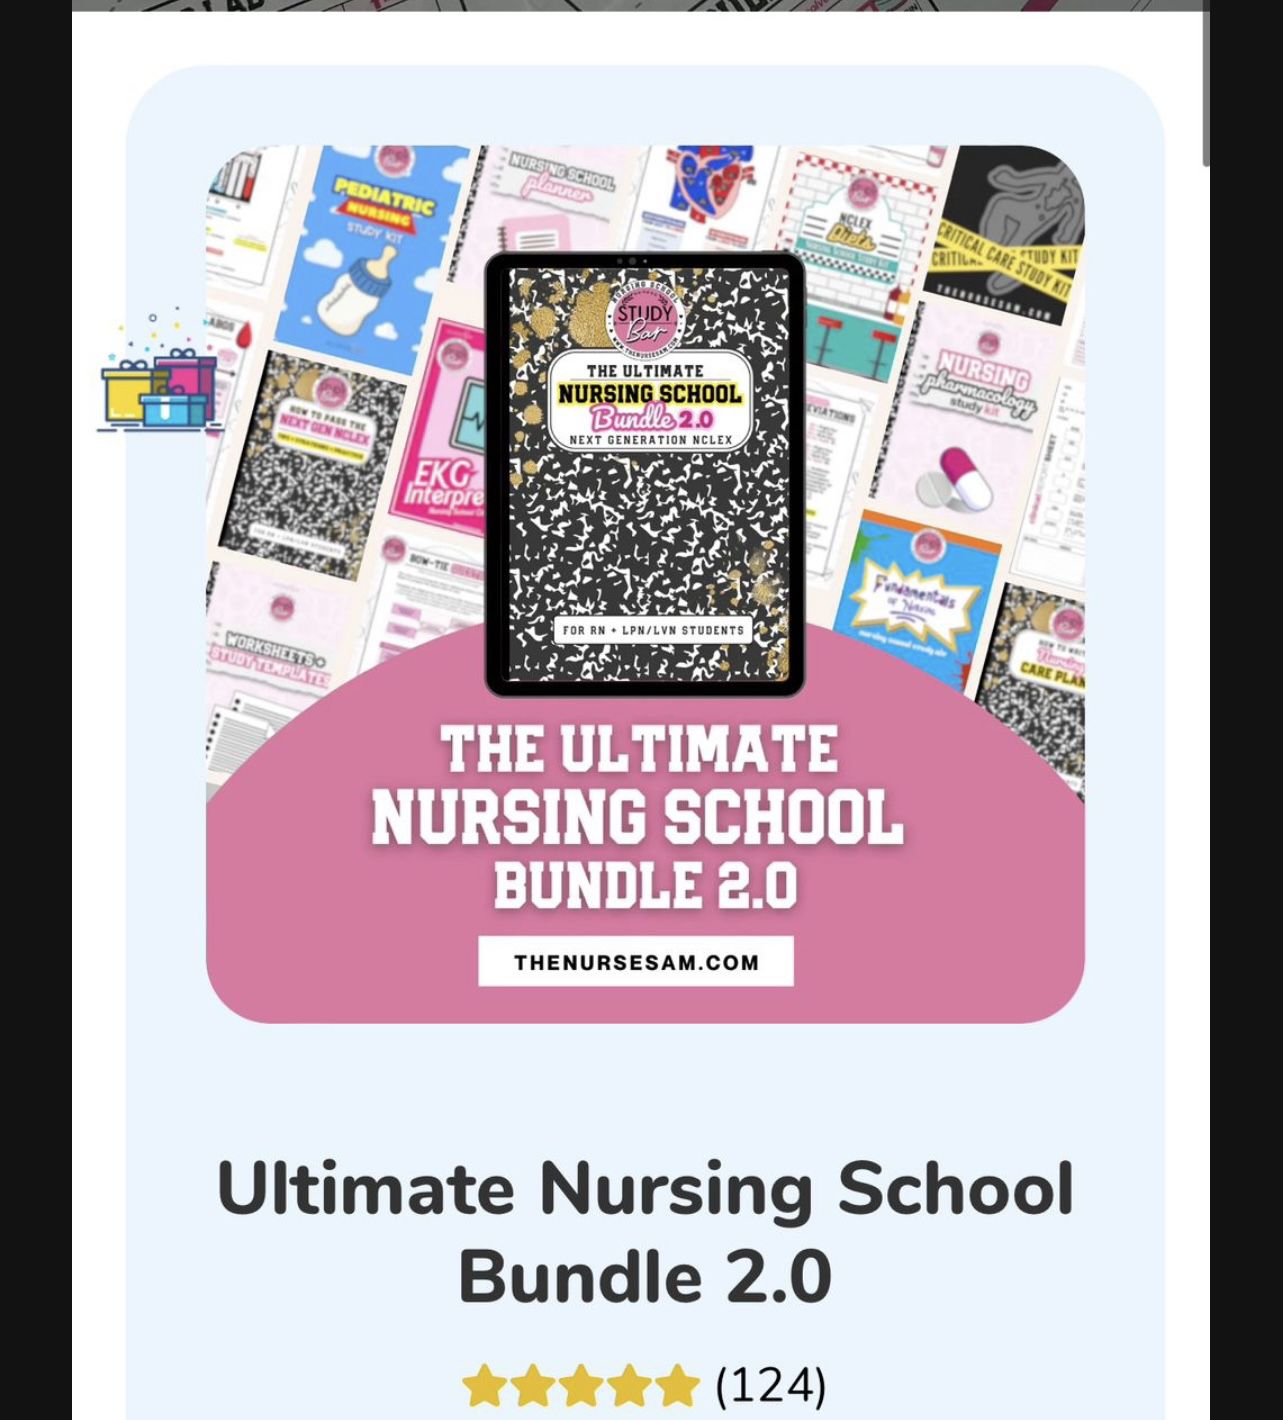 The Ultimate Nursing School Bundle 